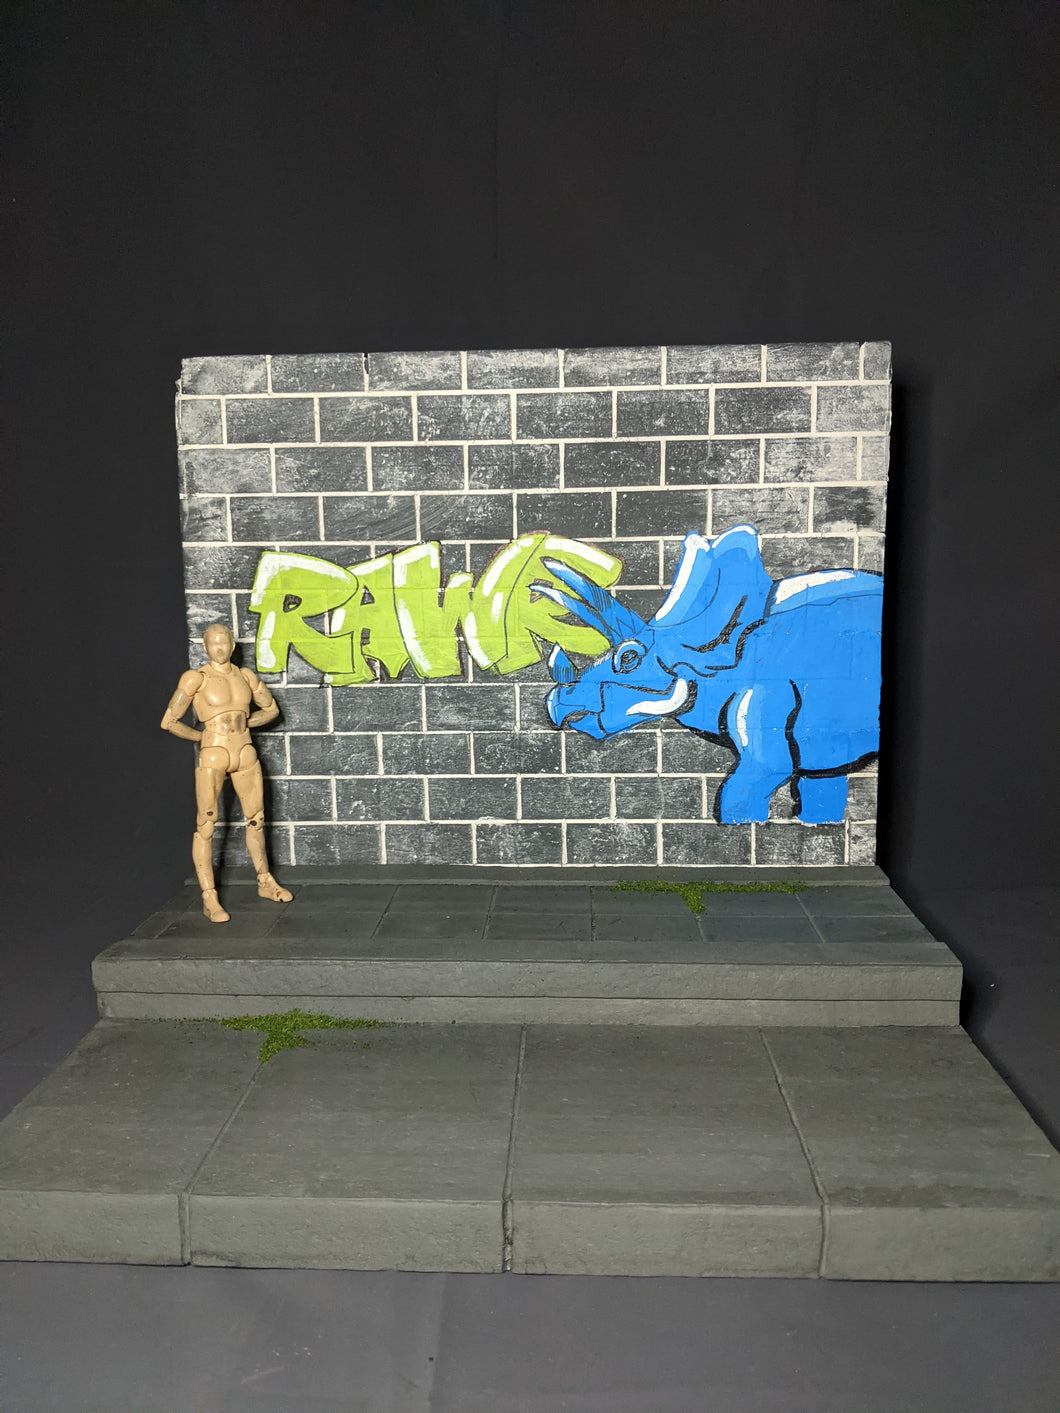 IKEA Detolf City Street with Graffiti Action Figure Display Diorama